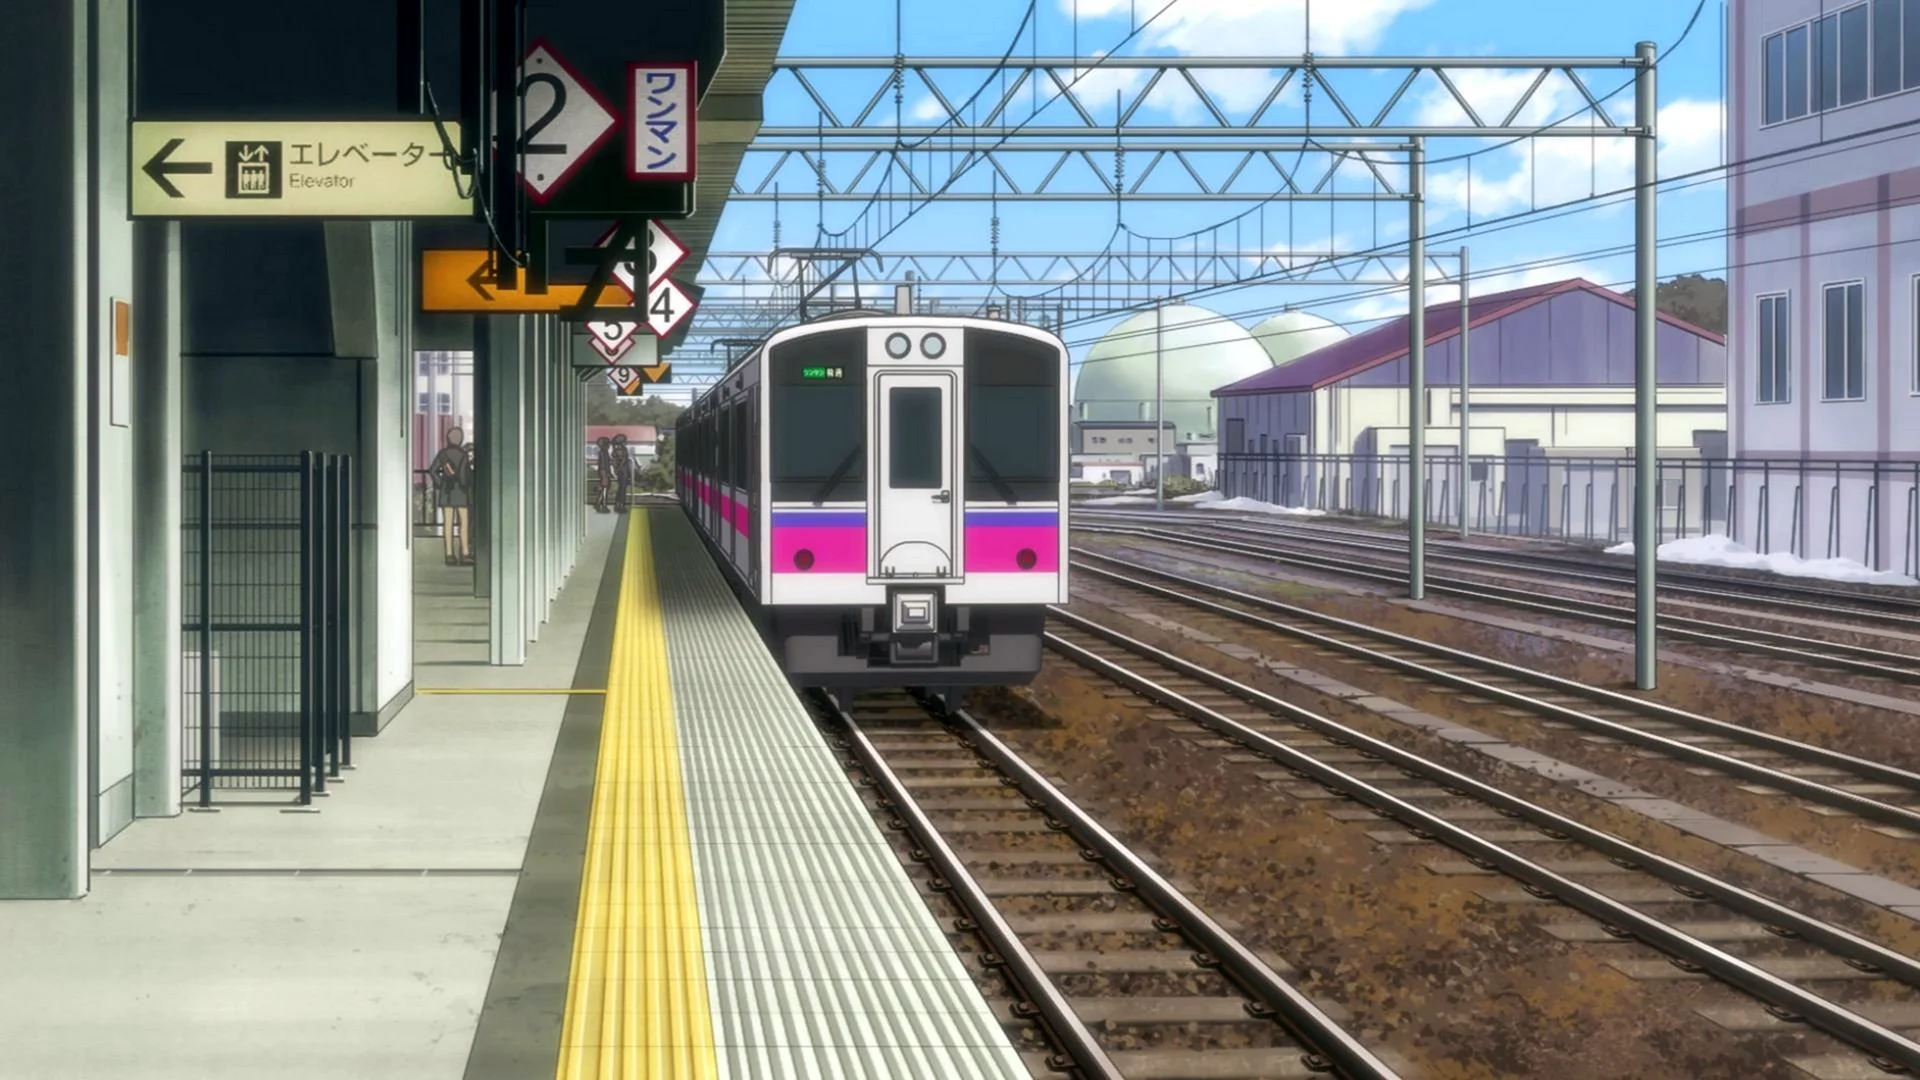 Station anime